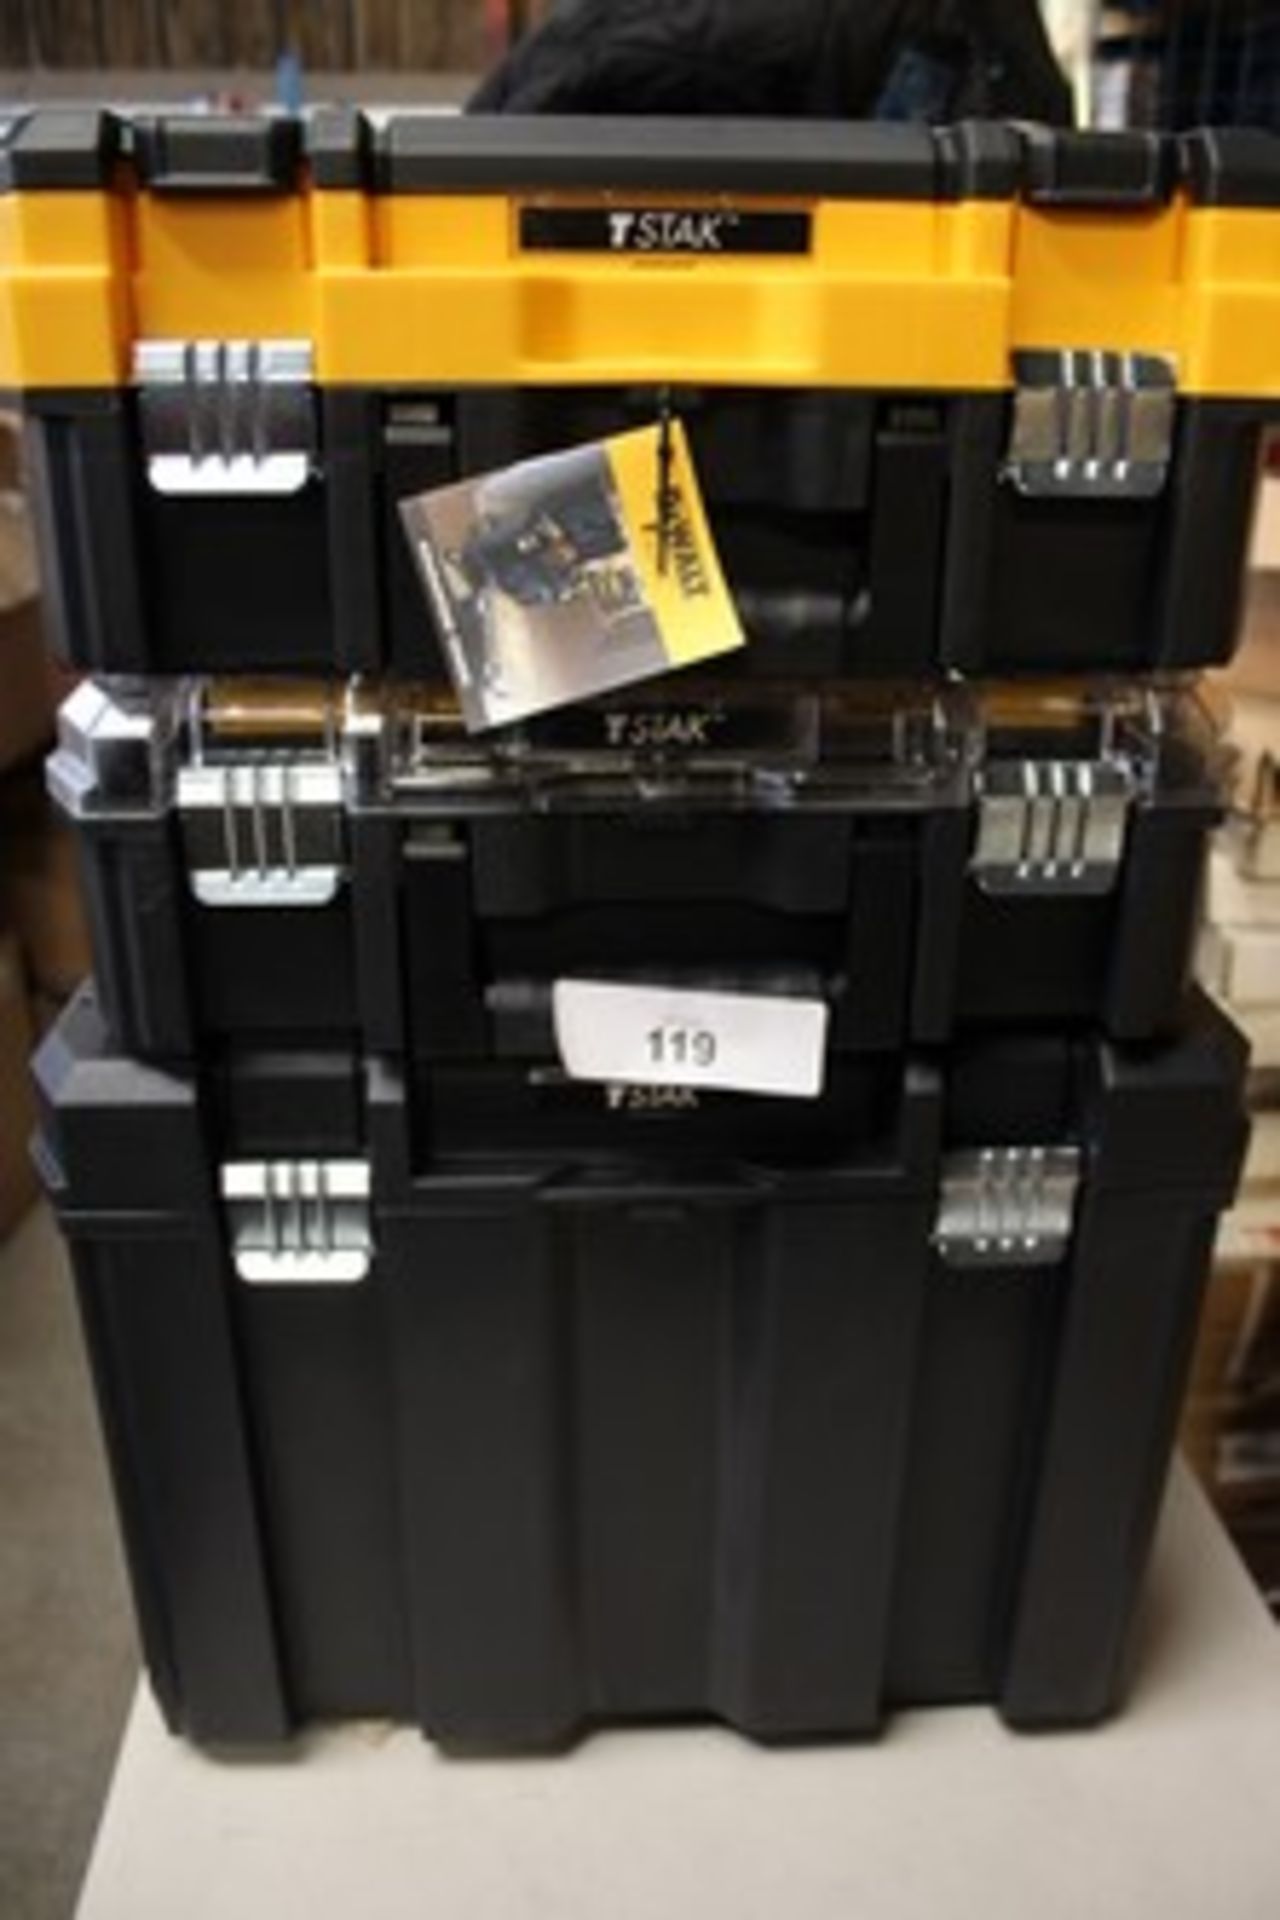 1 x DeWalt T Stack toolbox on wheels, model unknown - New (SWF11)